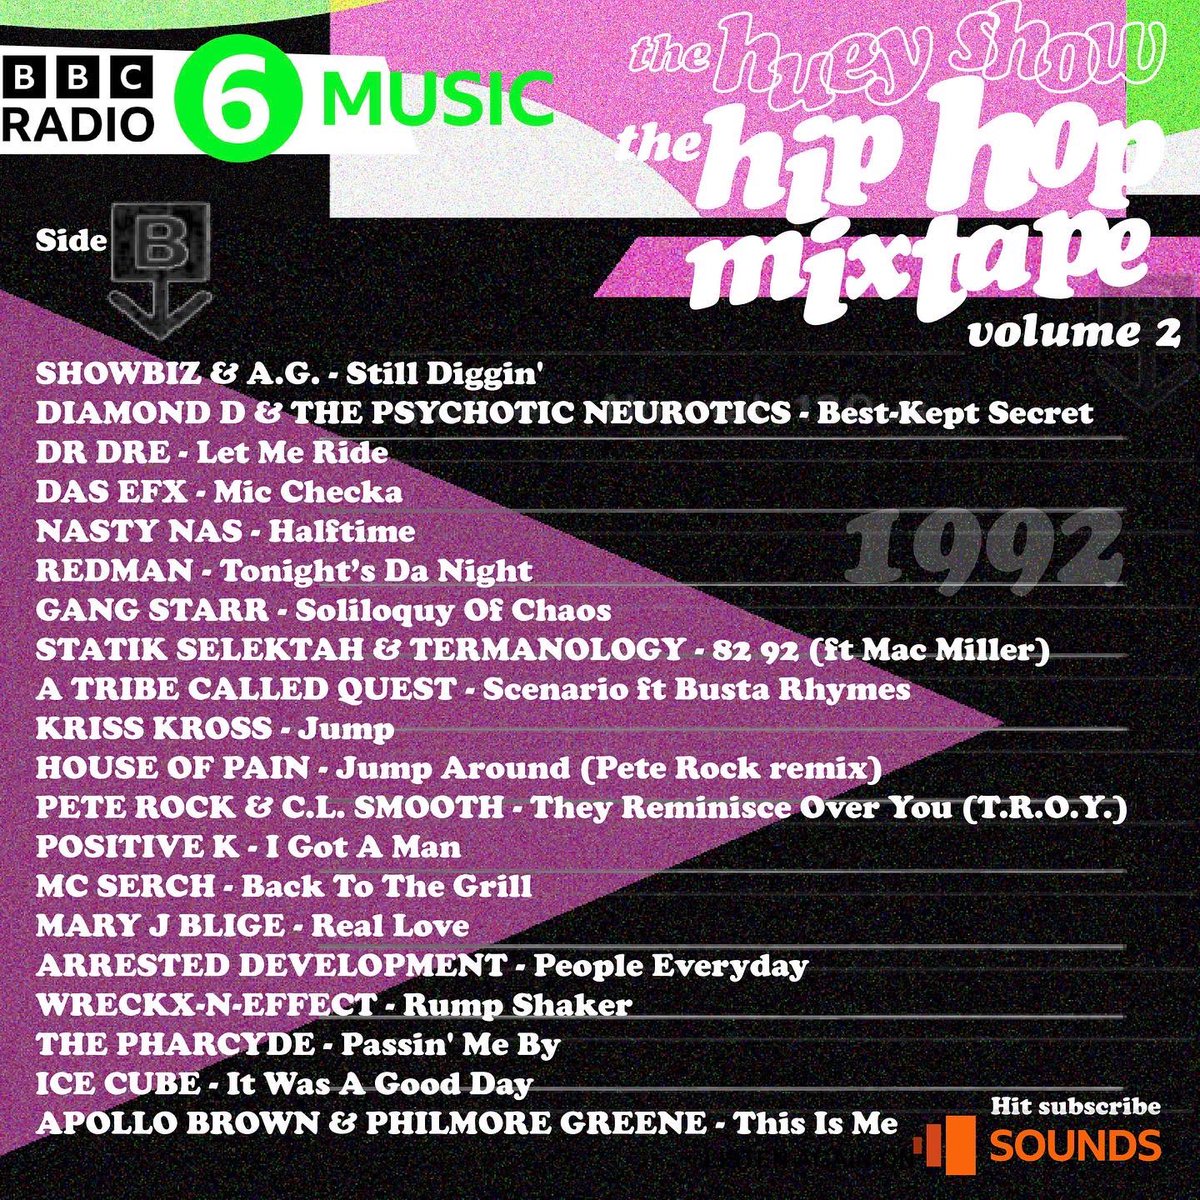 Episode 2 @OfficialHuey #HueyHipHopMixtape out now! 
2022 x 1992

Listen on @BBCSounds 
Live broadcast @BBC6Music midnight Sunday/Monday

bbc.co.uk/sounds/brand/m… #hiphop #rap #newhiphop #1992hiphop